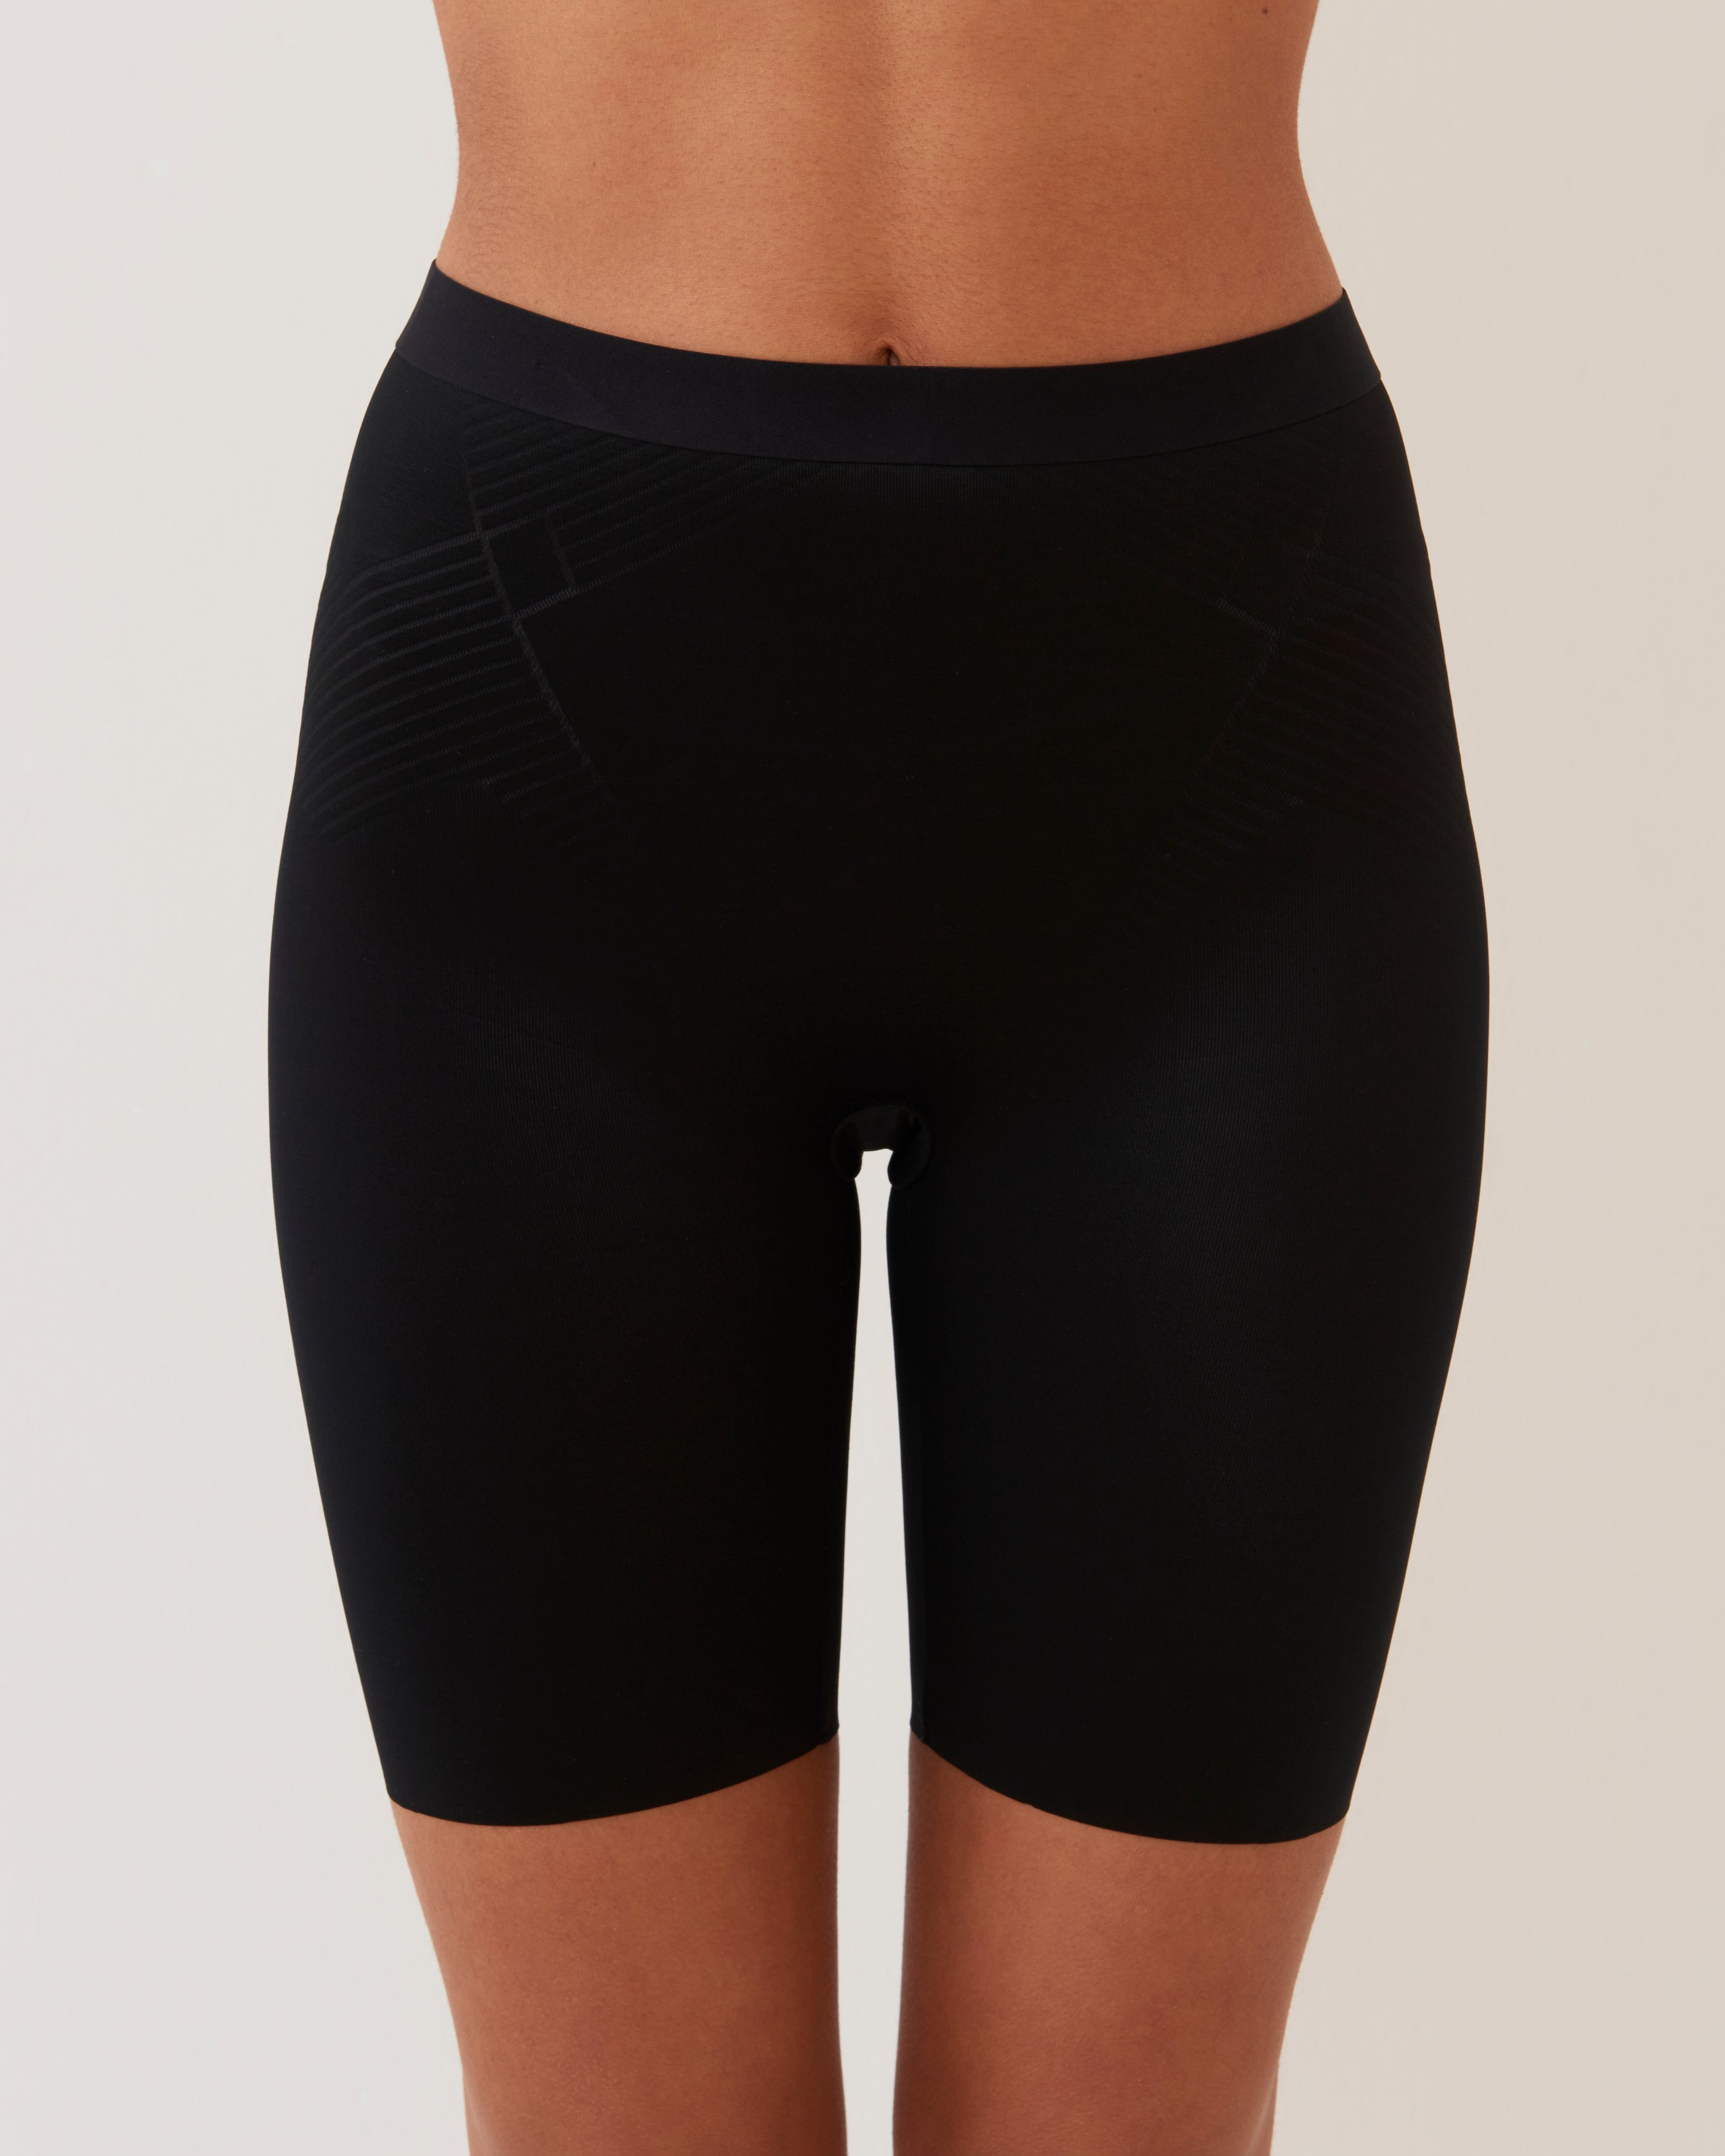 Slimming Black Shorts by SPANX